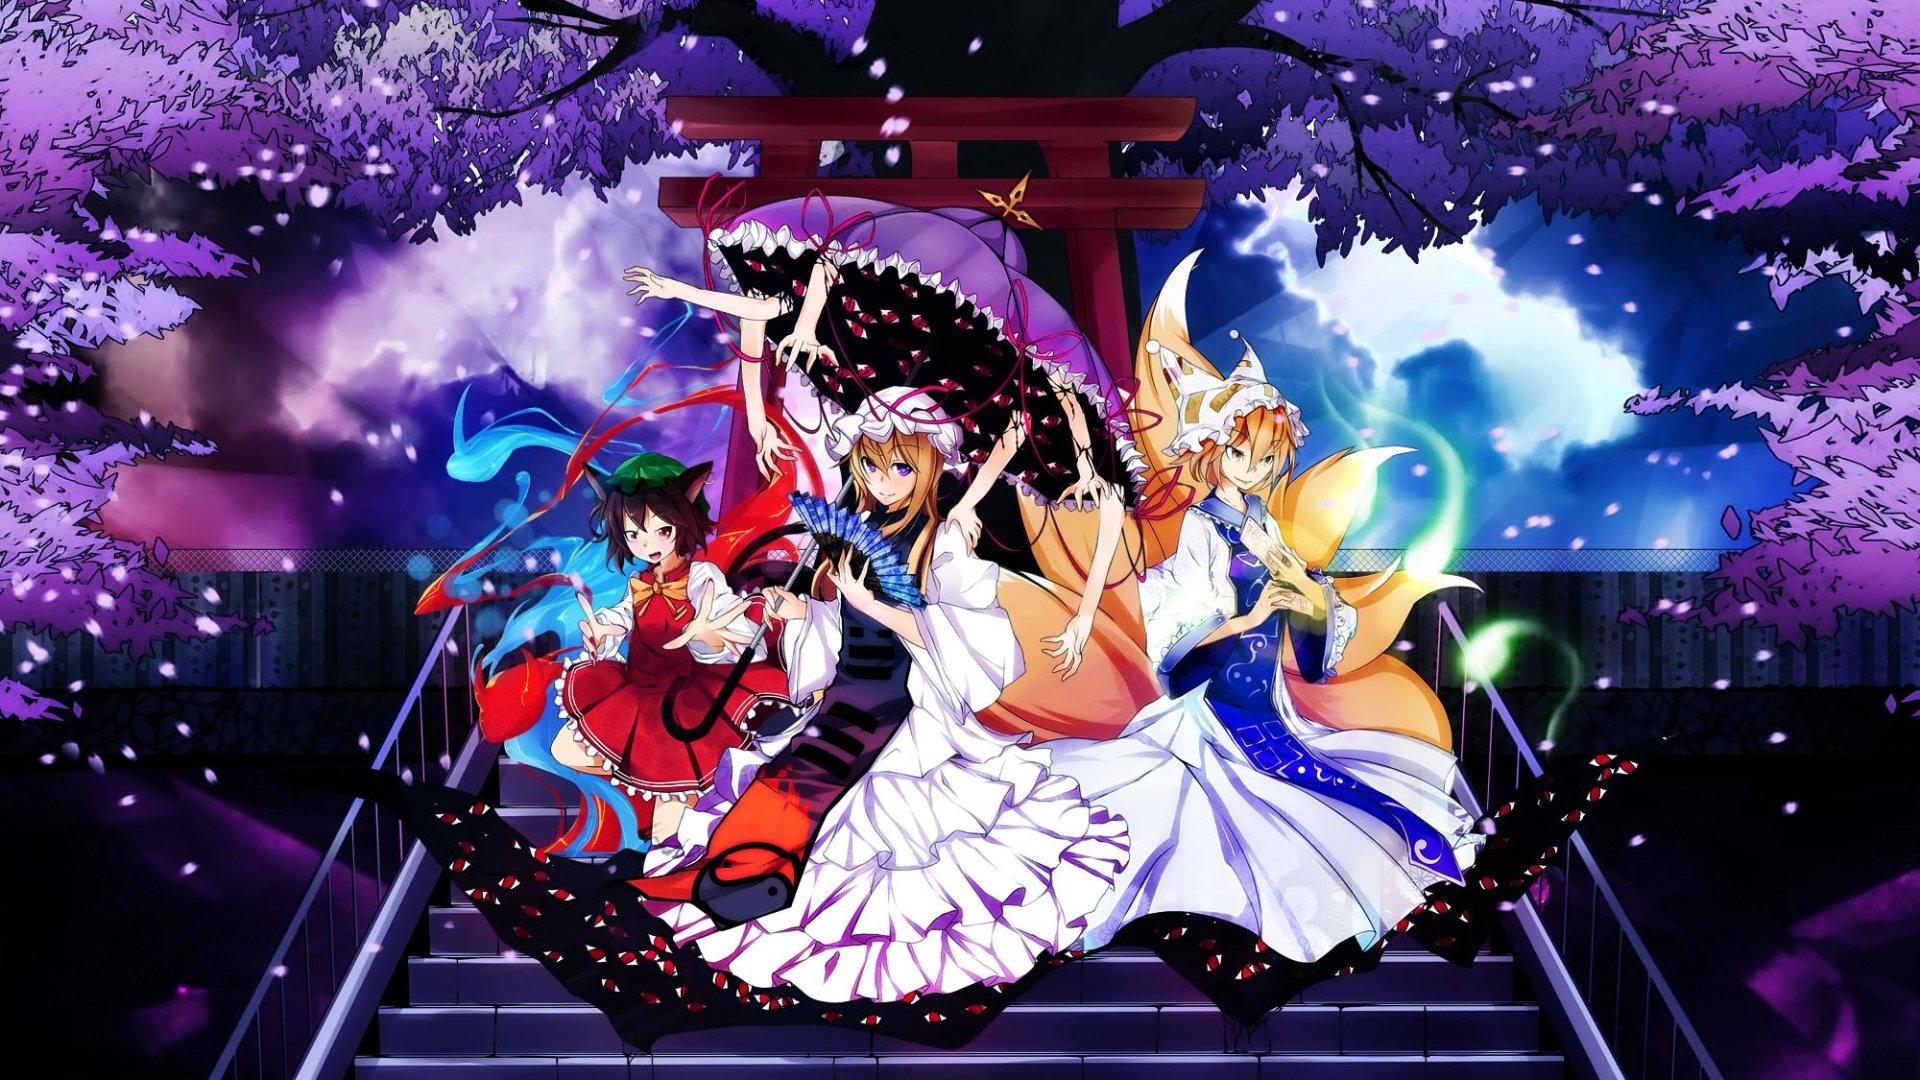 Saigyou Ayakashi HD Wallpaper Background Image